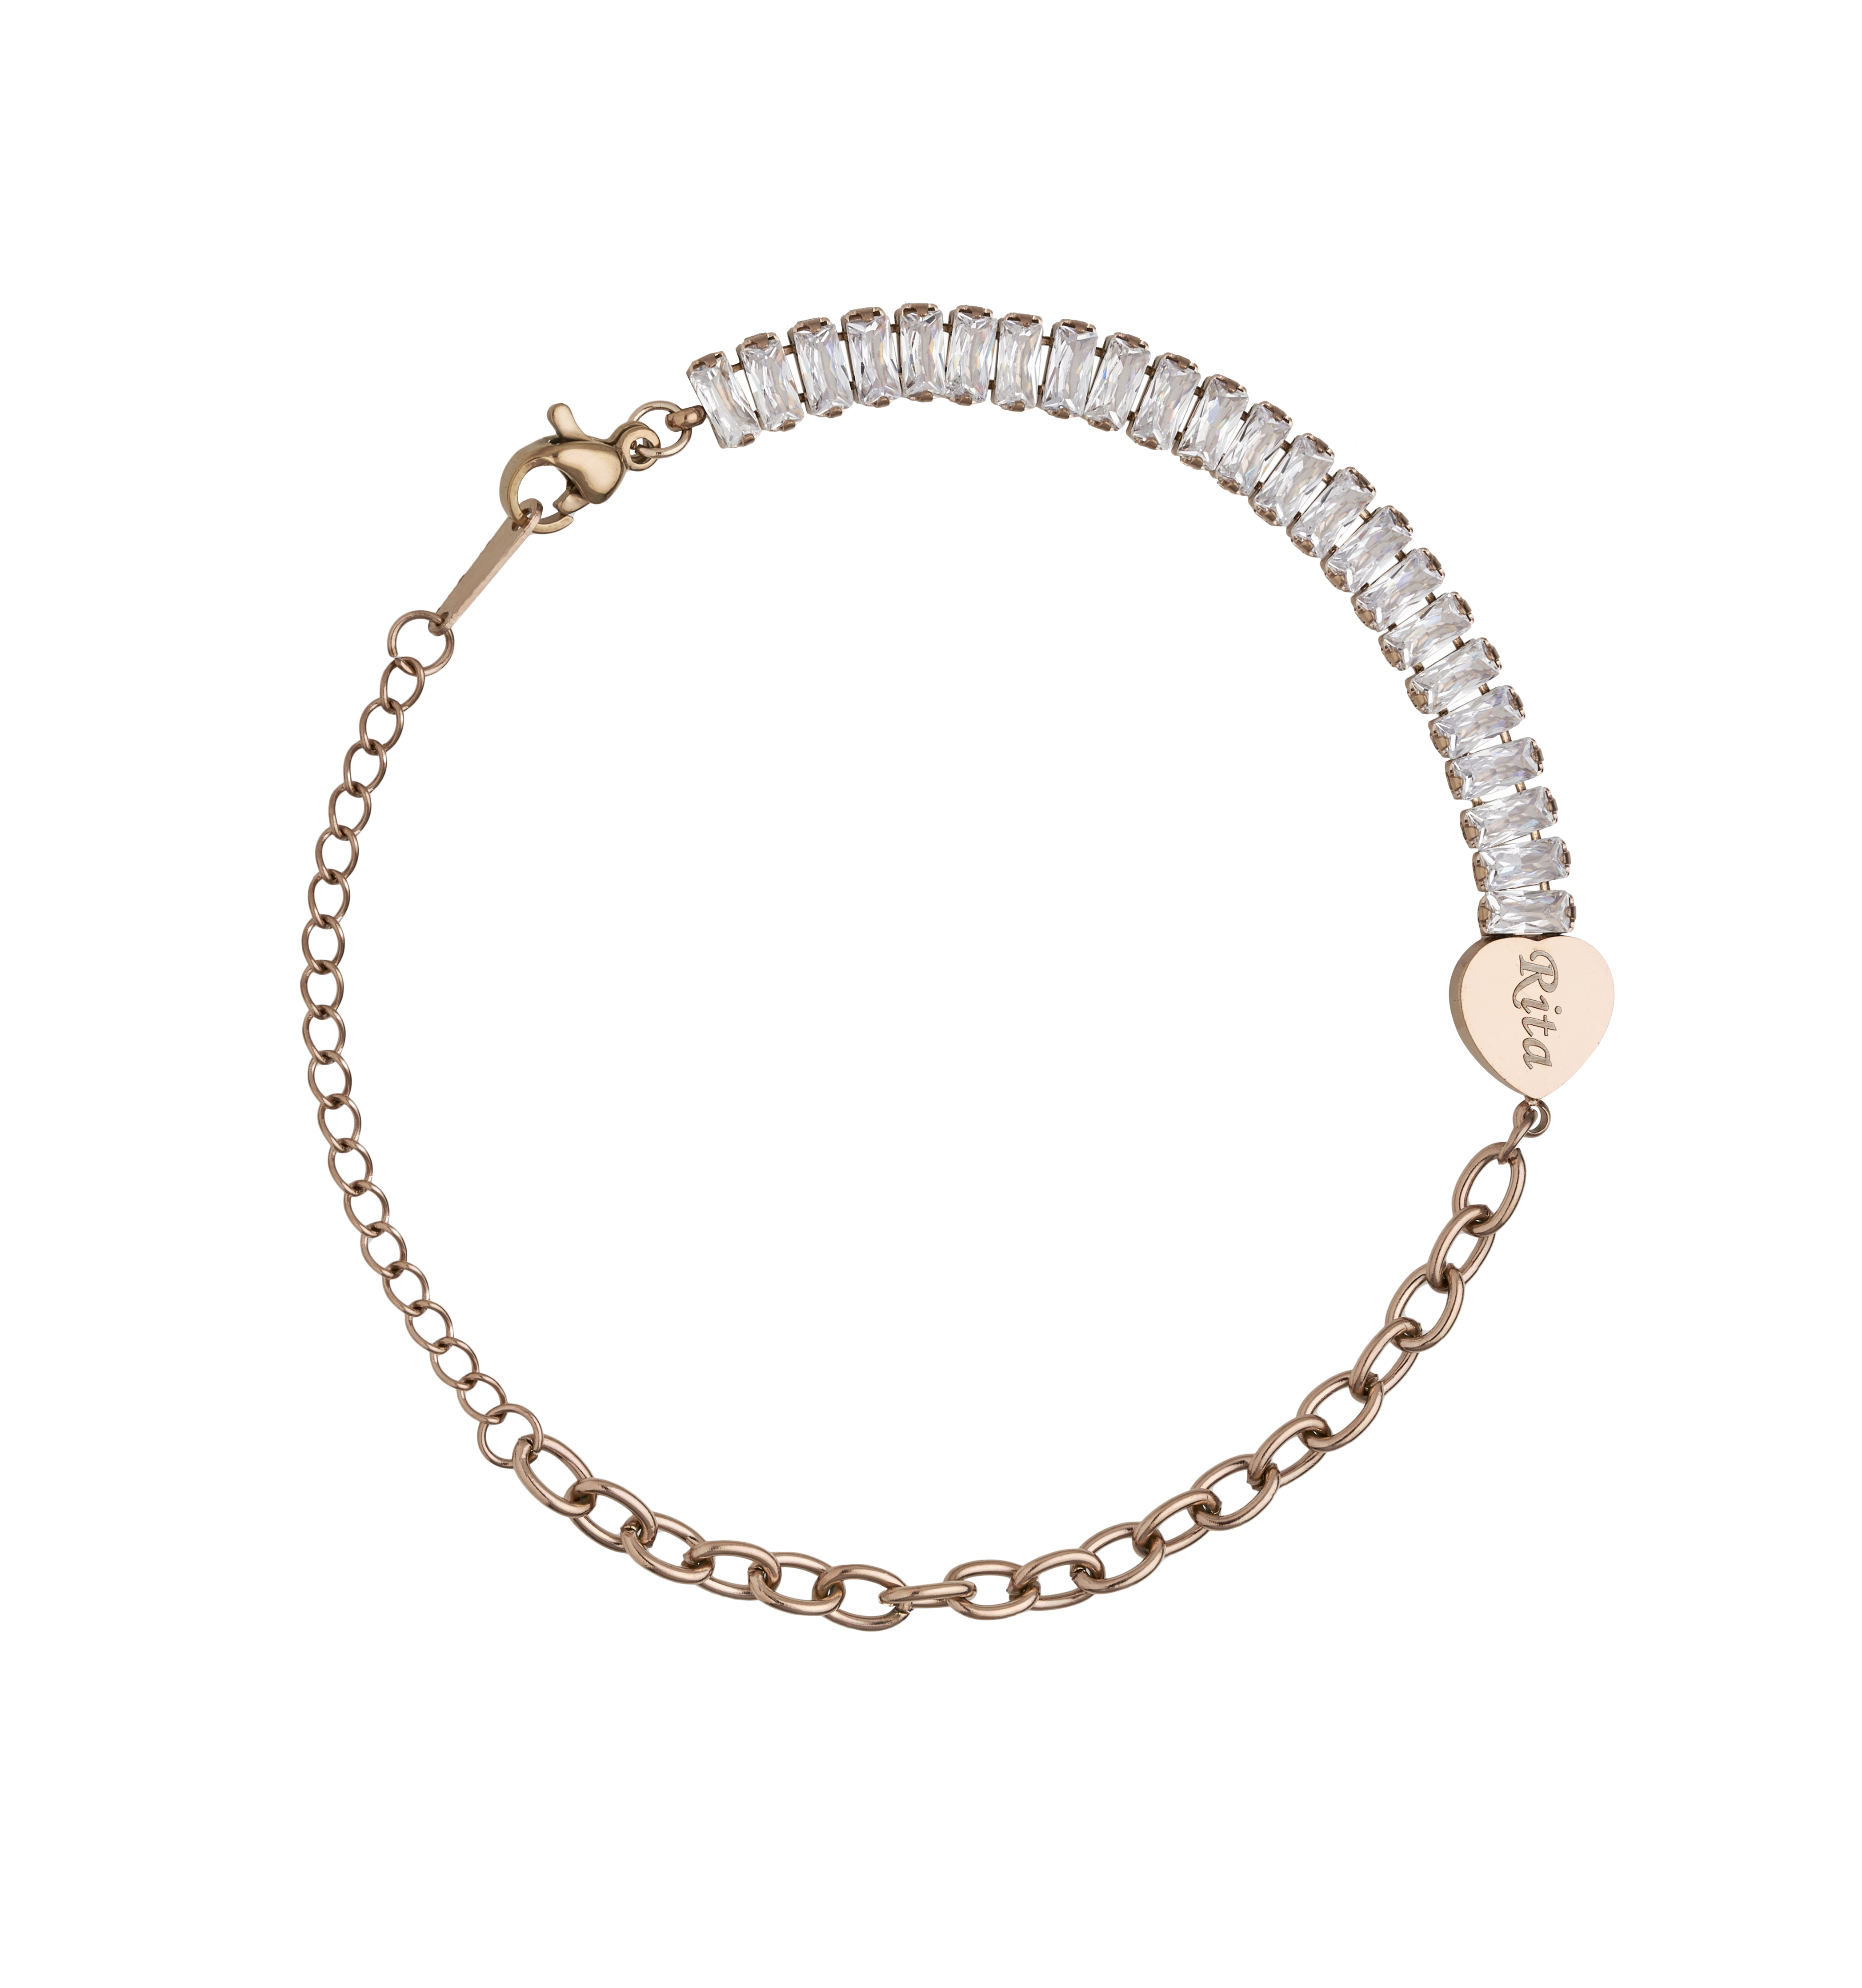 Buy Personalized Name Bracelet Arabic Name Bracelet Name Online in India -  Etsy | Gold bridesmaid gifts, Bracelet gift, Dainty bracelets